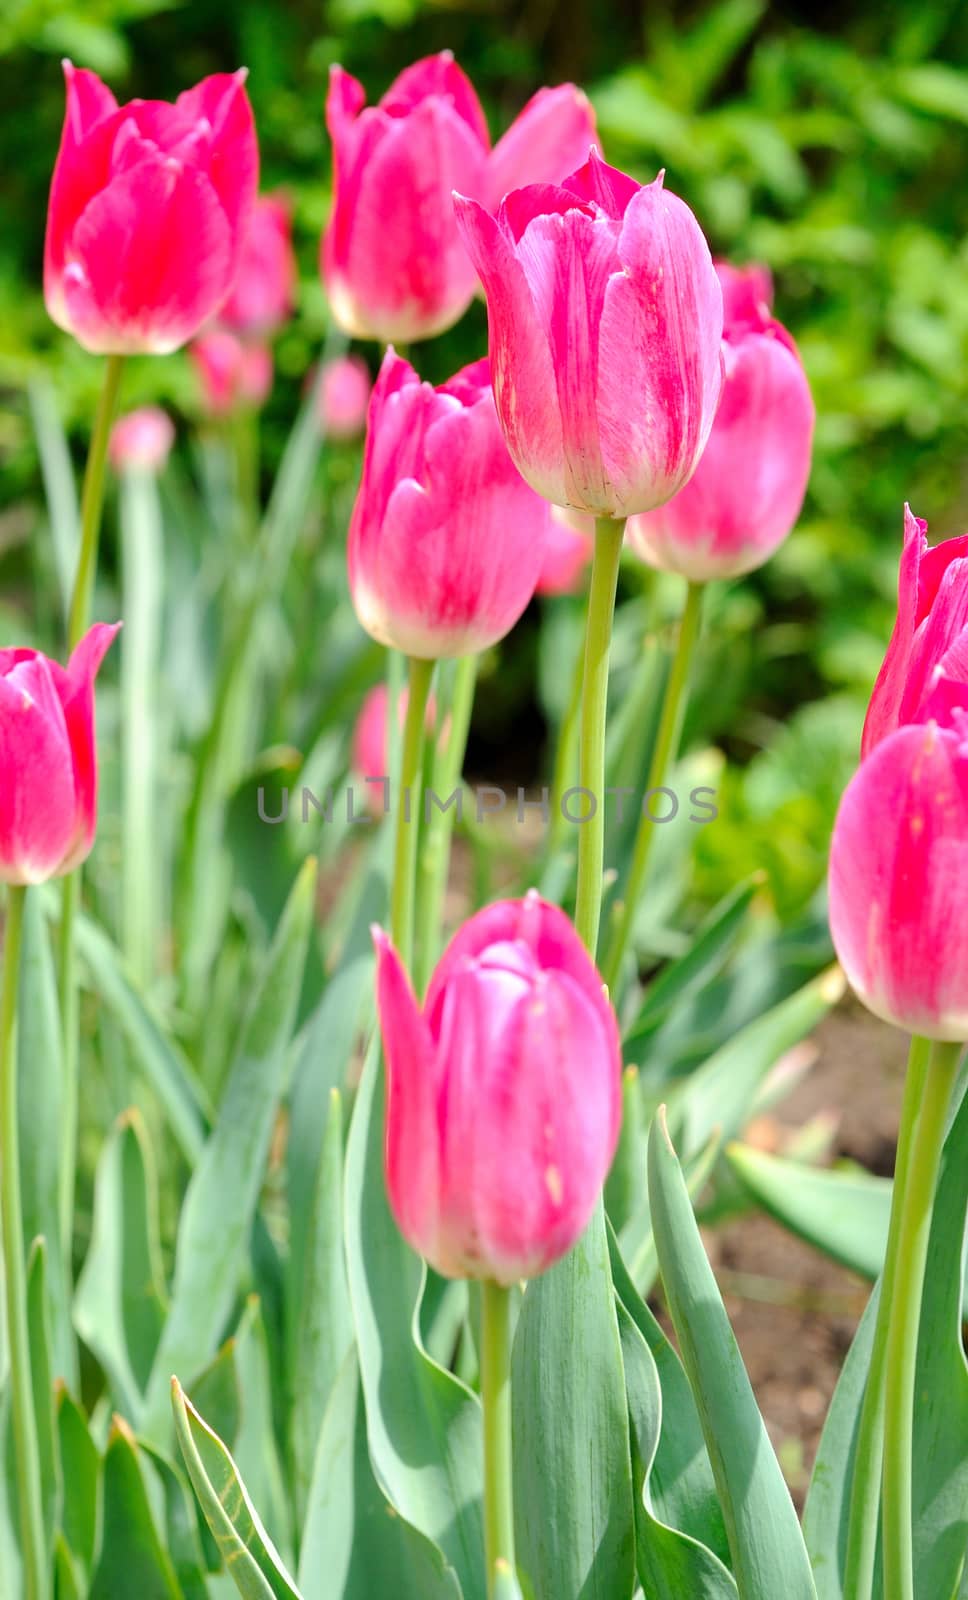 Tulips by hamik